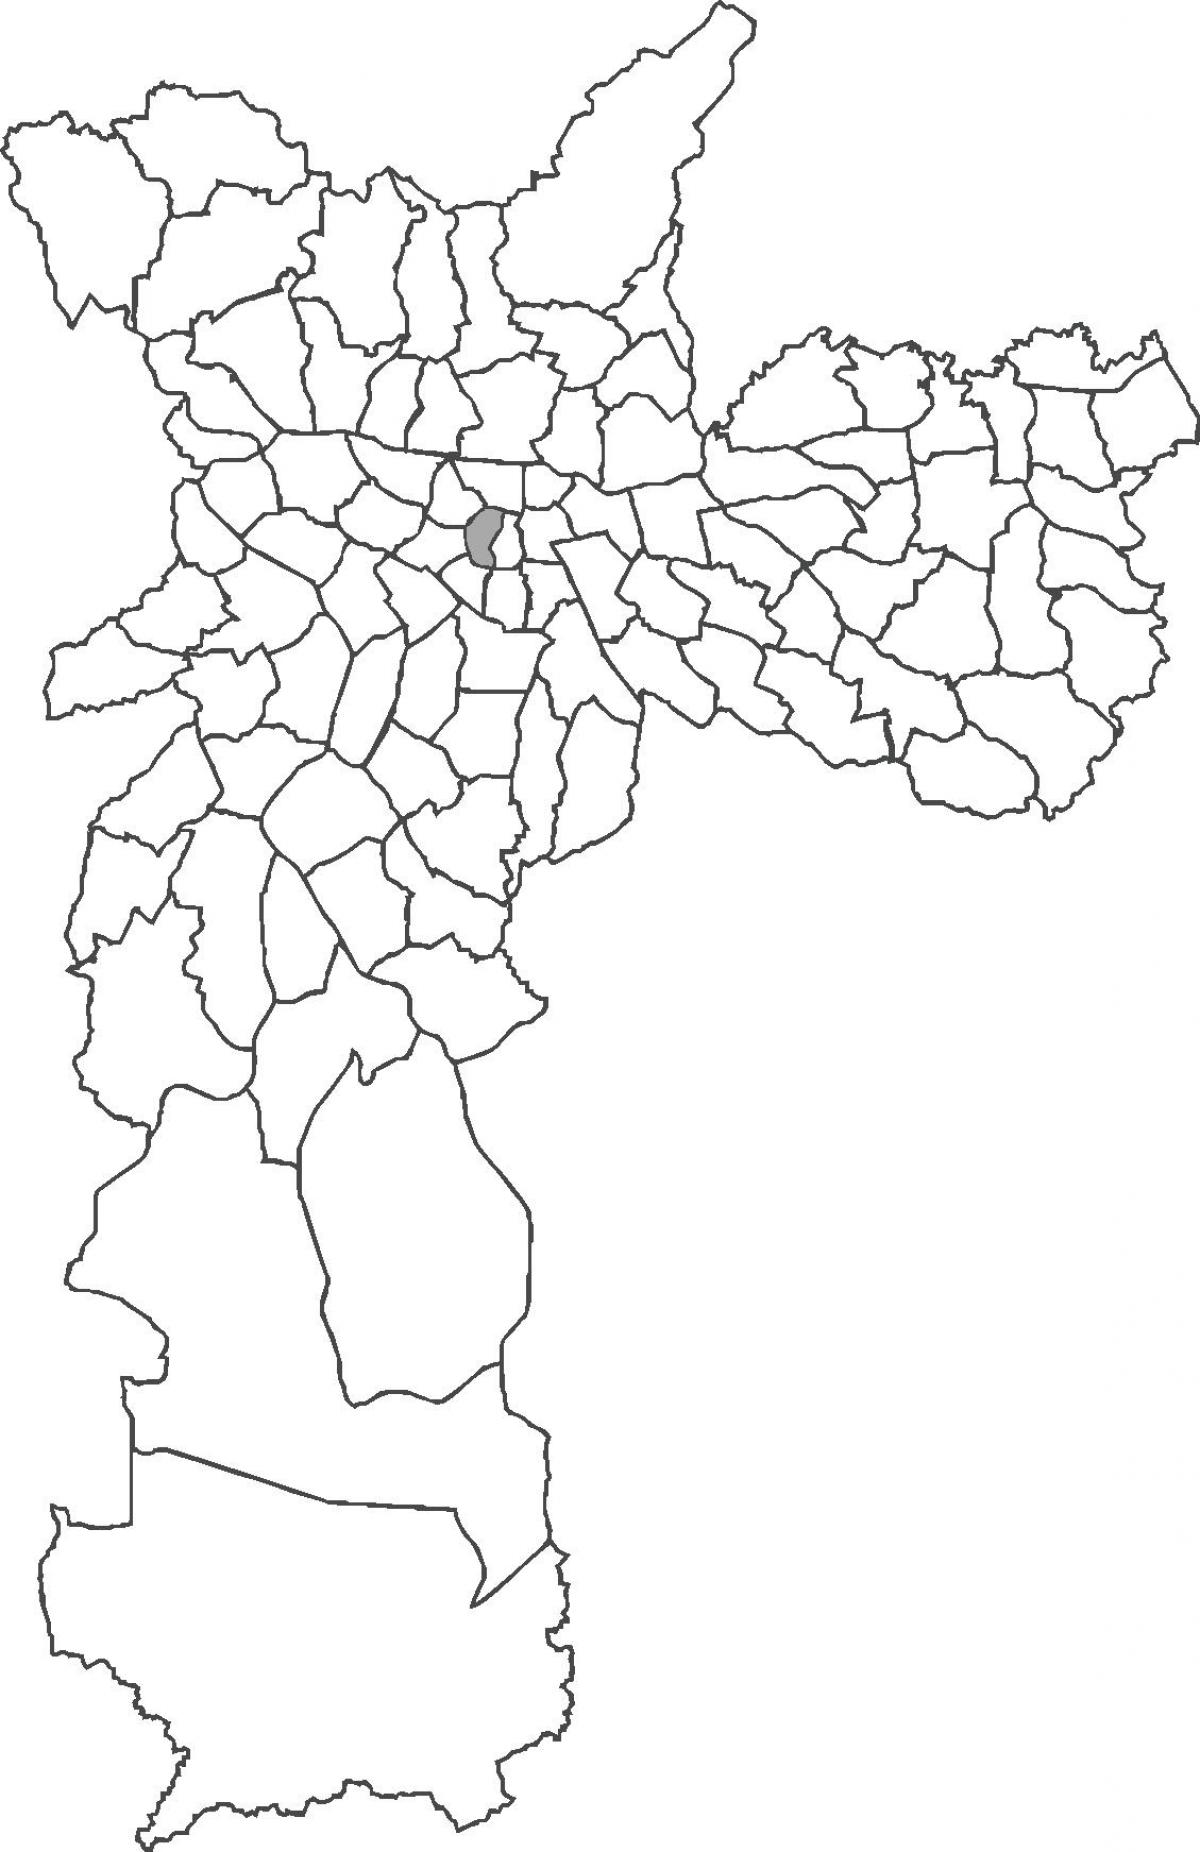 República bölge haritası